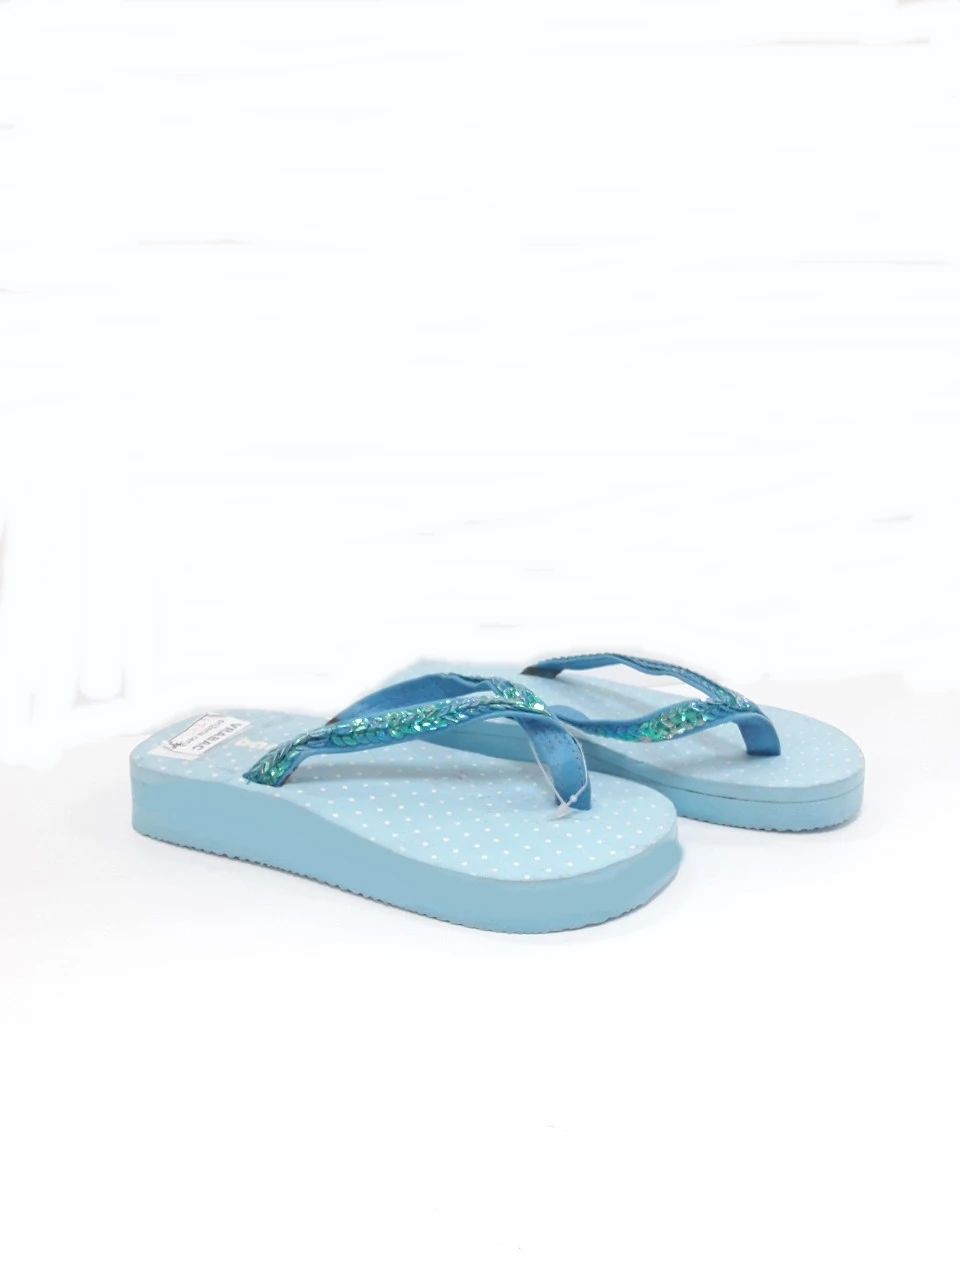 Ciciban plažne papuče plave - dečije papuče za plažu